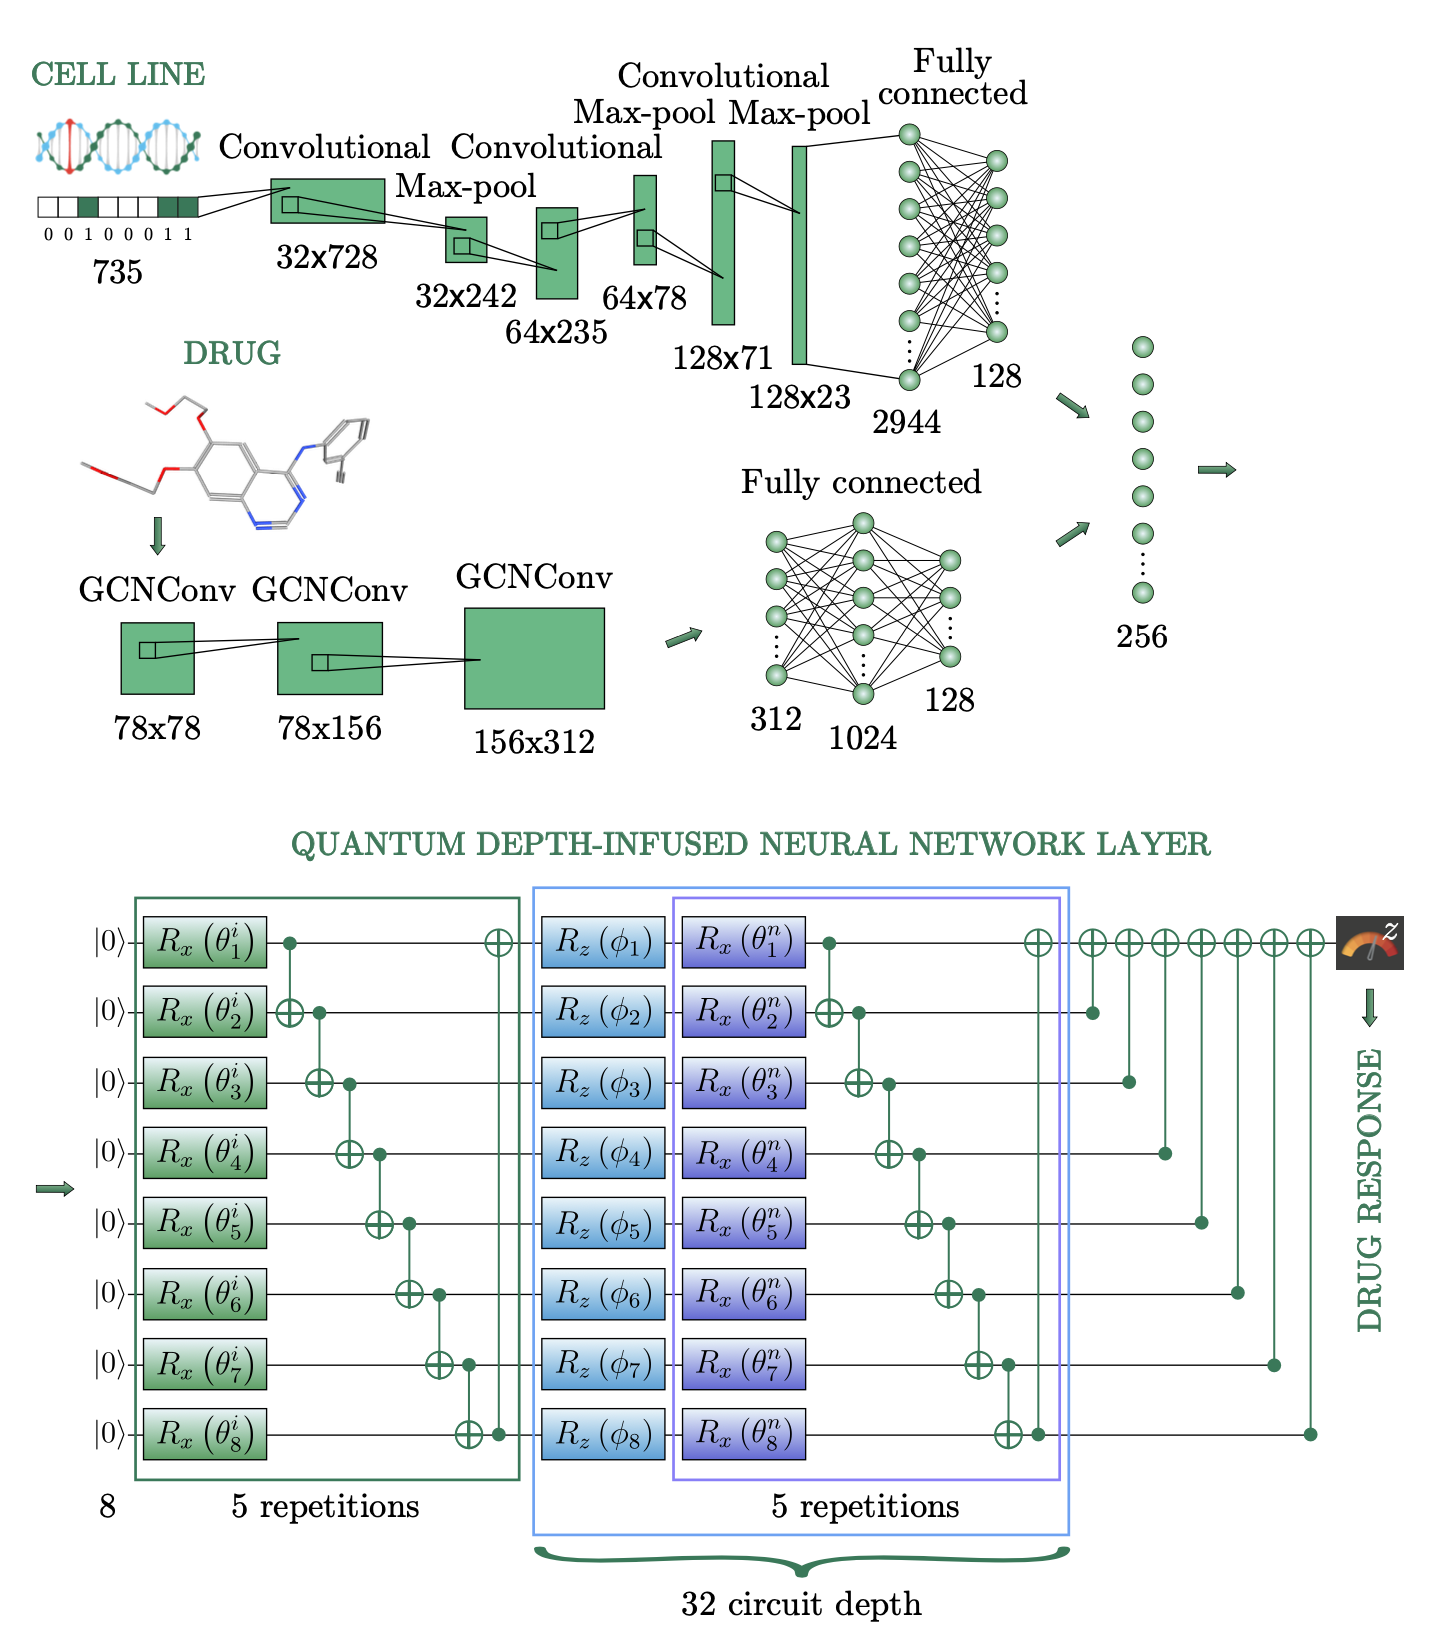 Hybrid quantum classical neural network for drug optimisation